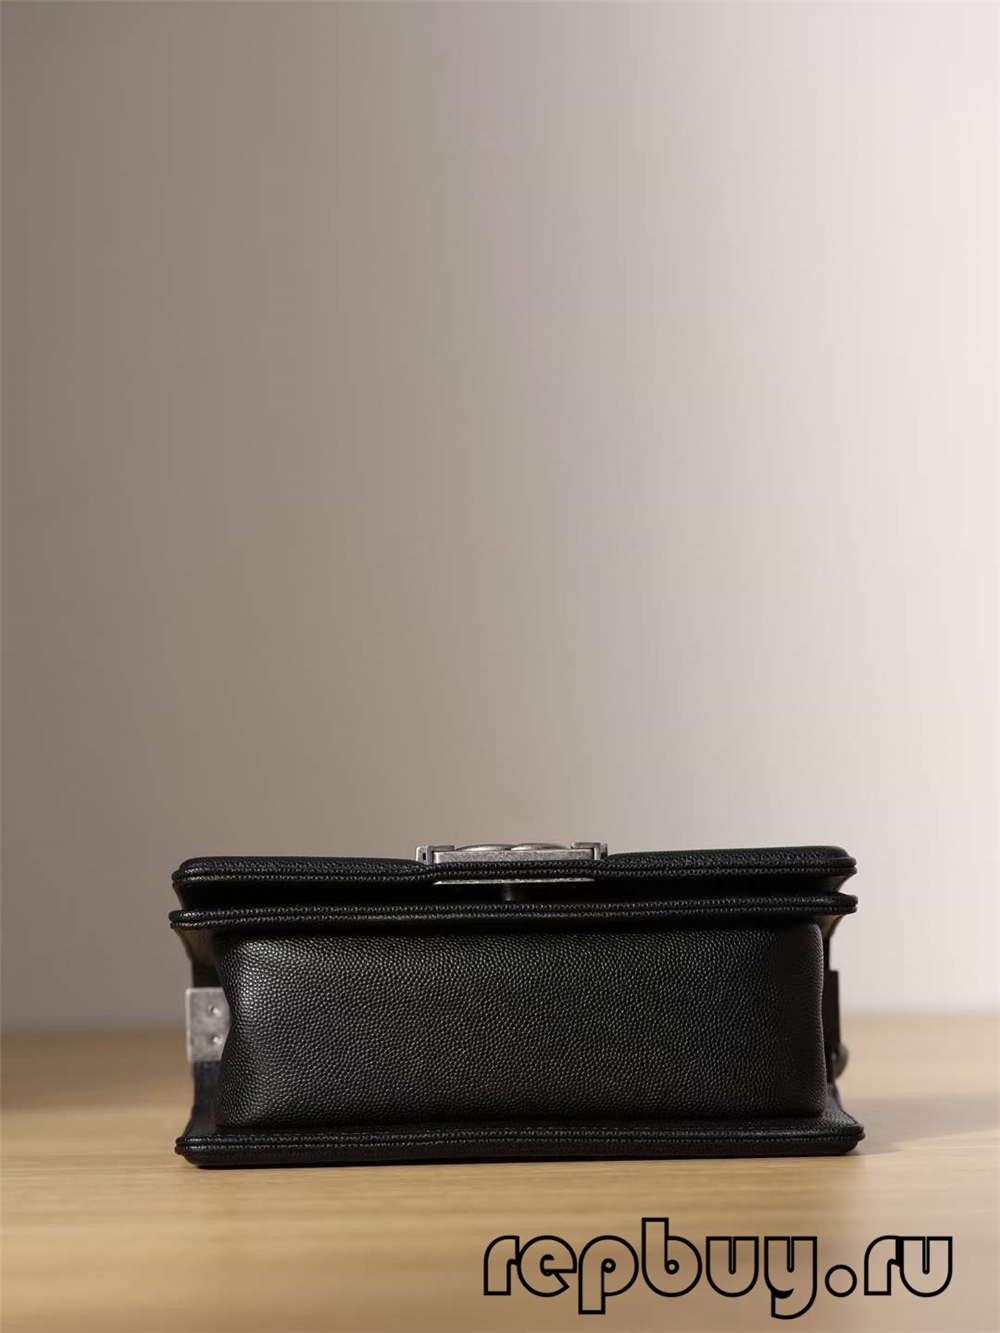 Chanel Leboy Top Replica Handbag Black Small (2022 Updated)-Best Quality Fake Louis Vuitton Bag Online Store, Replica designer bag ru